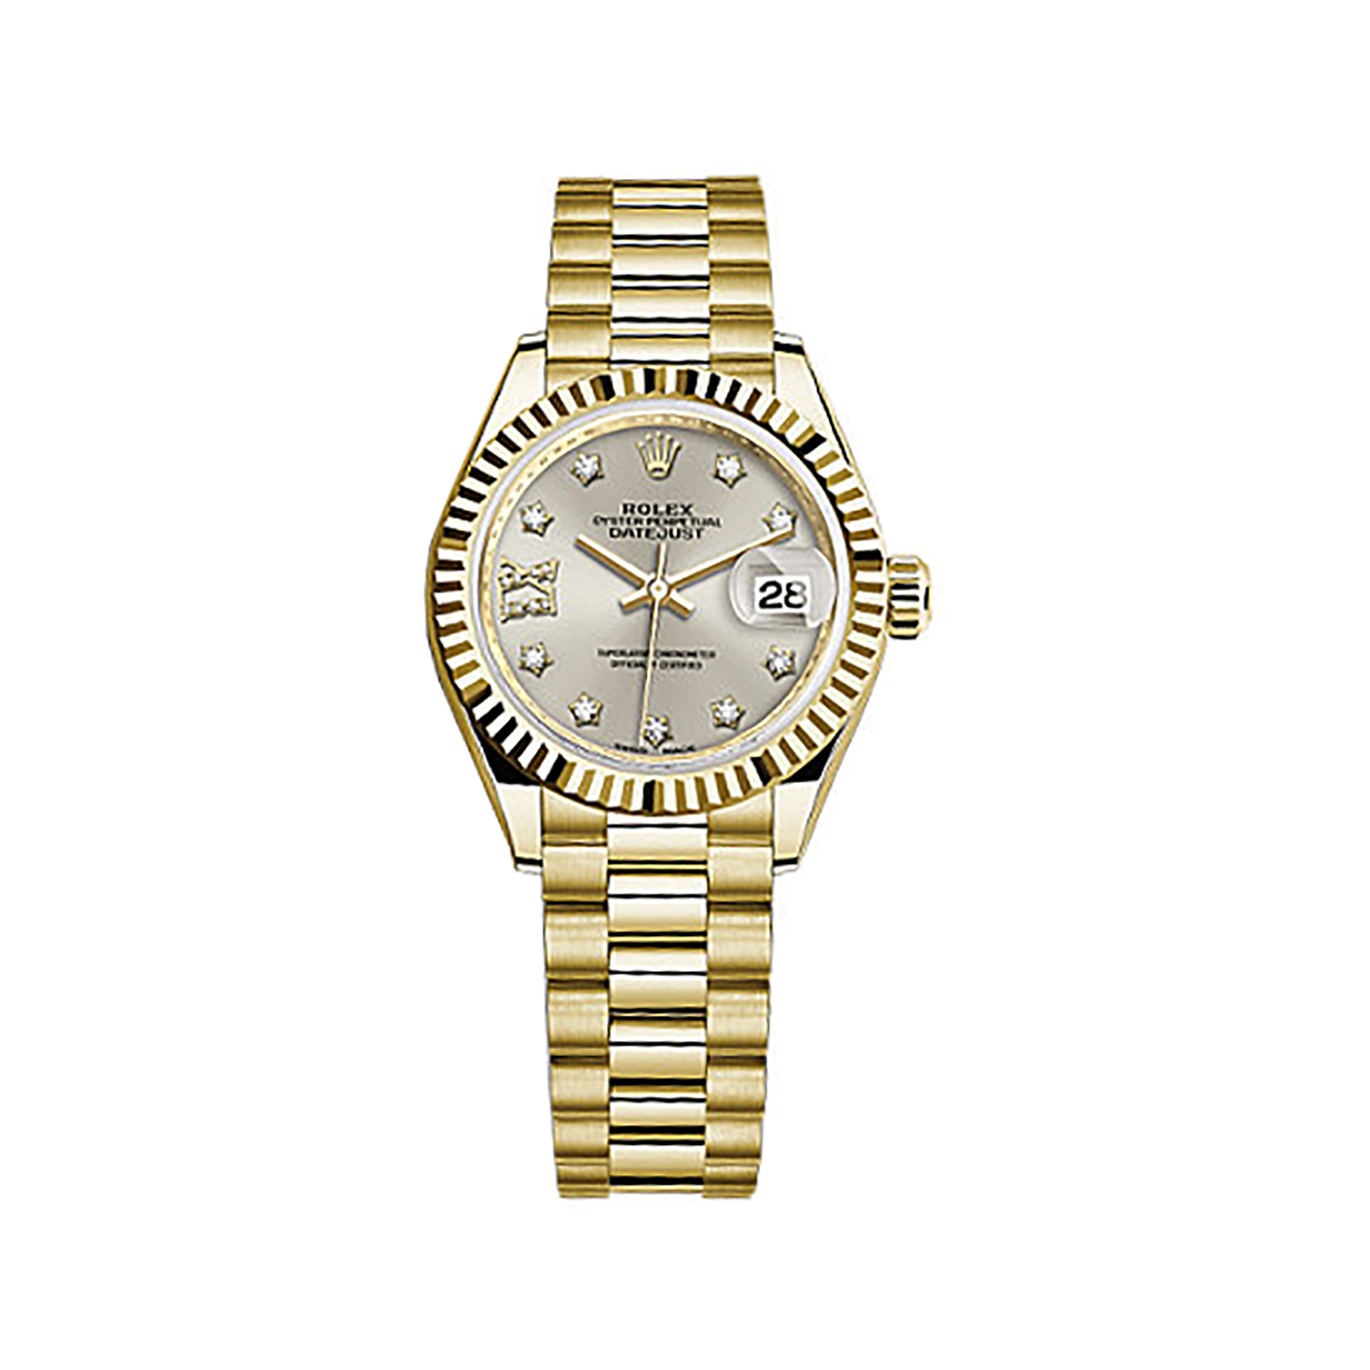 Lady-Datejust 28 279178 Gold Watch (Silver Set with Diamonds)